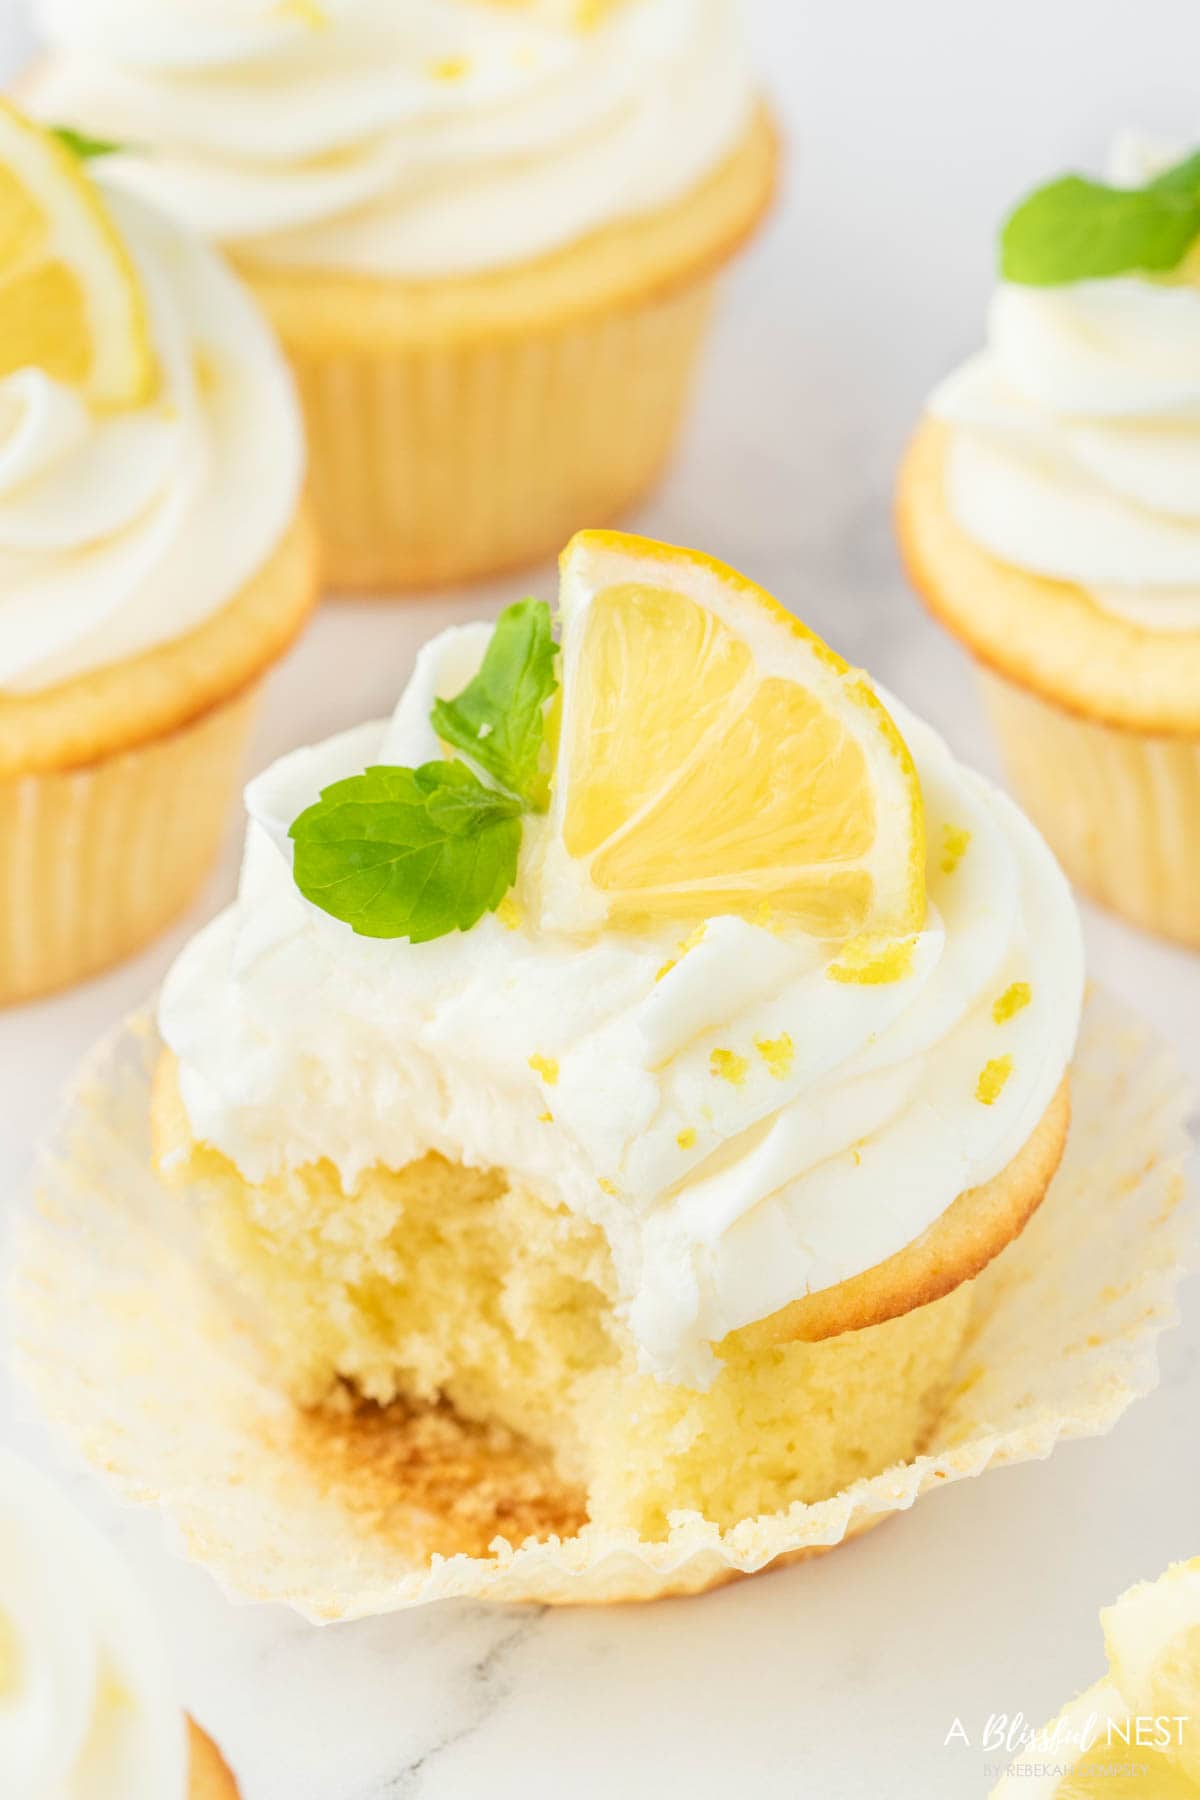 Lemon cupcake with a delicious bite taken.